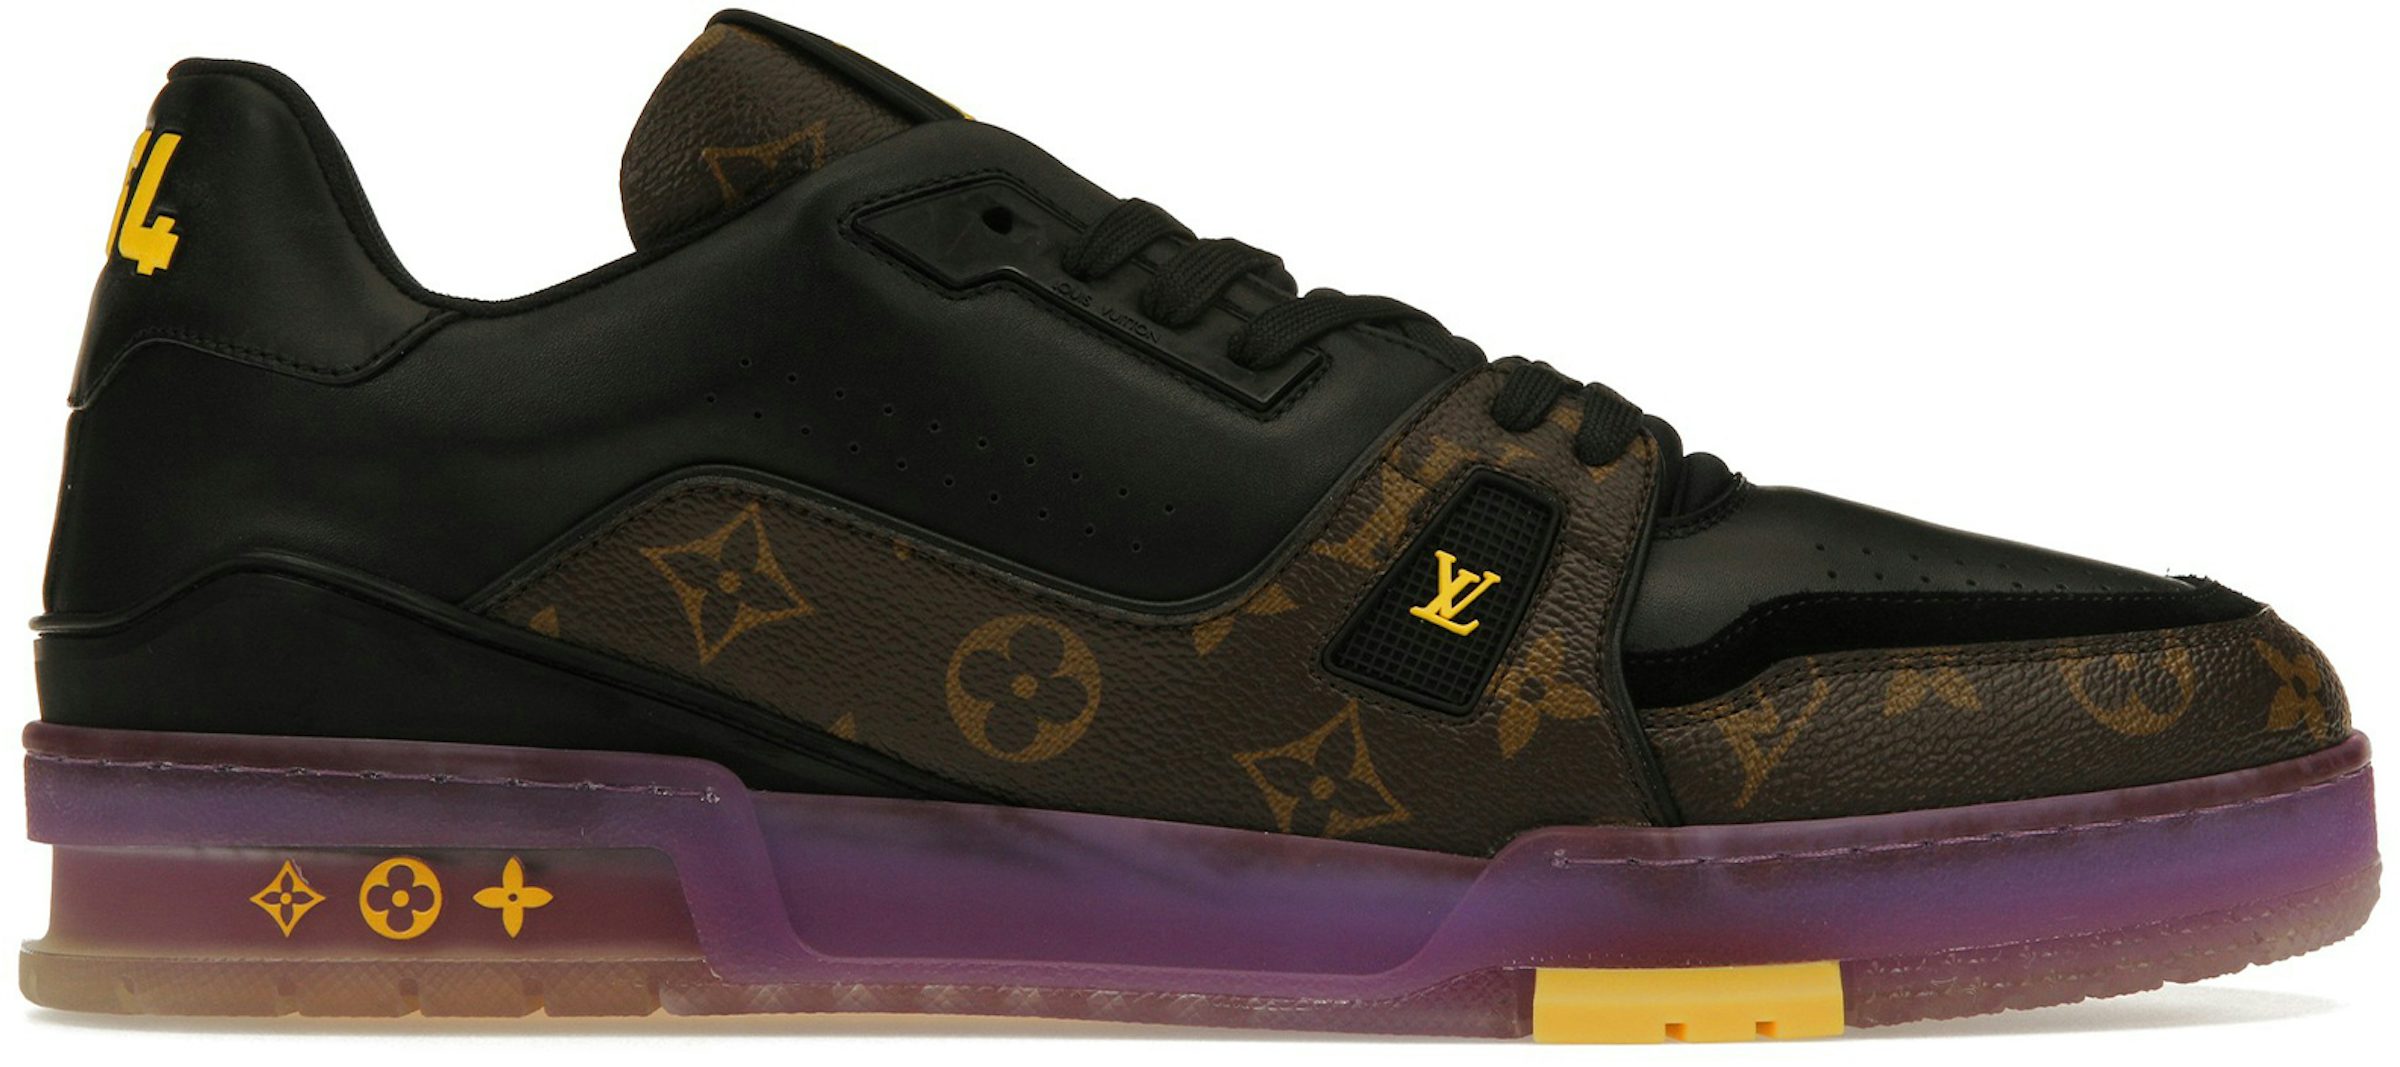 Louis Vuitton 20ss Trainer purple Casual Shoes